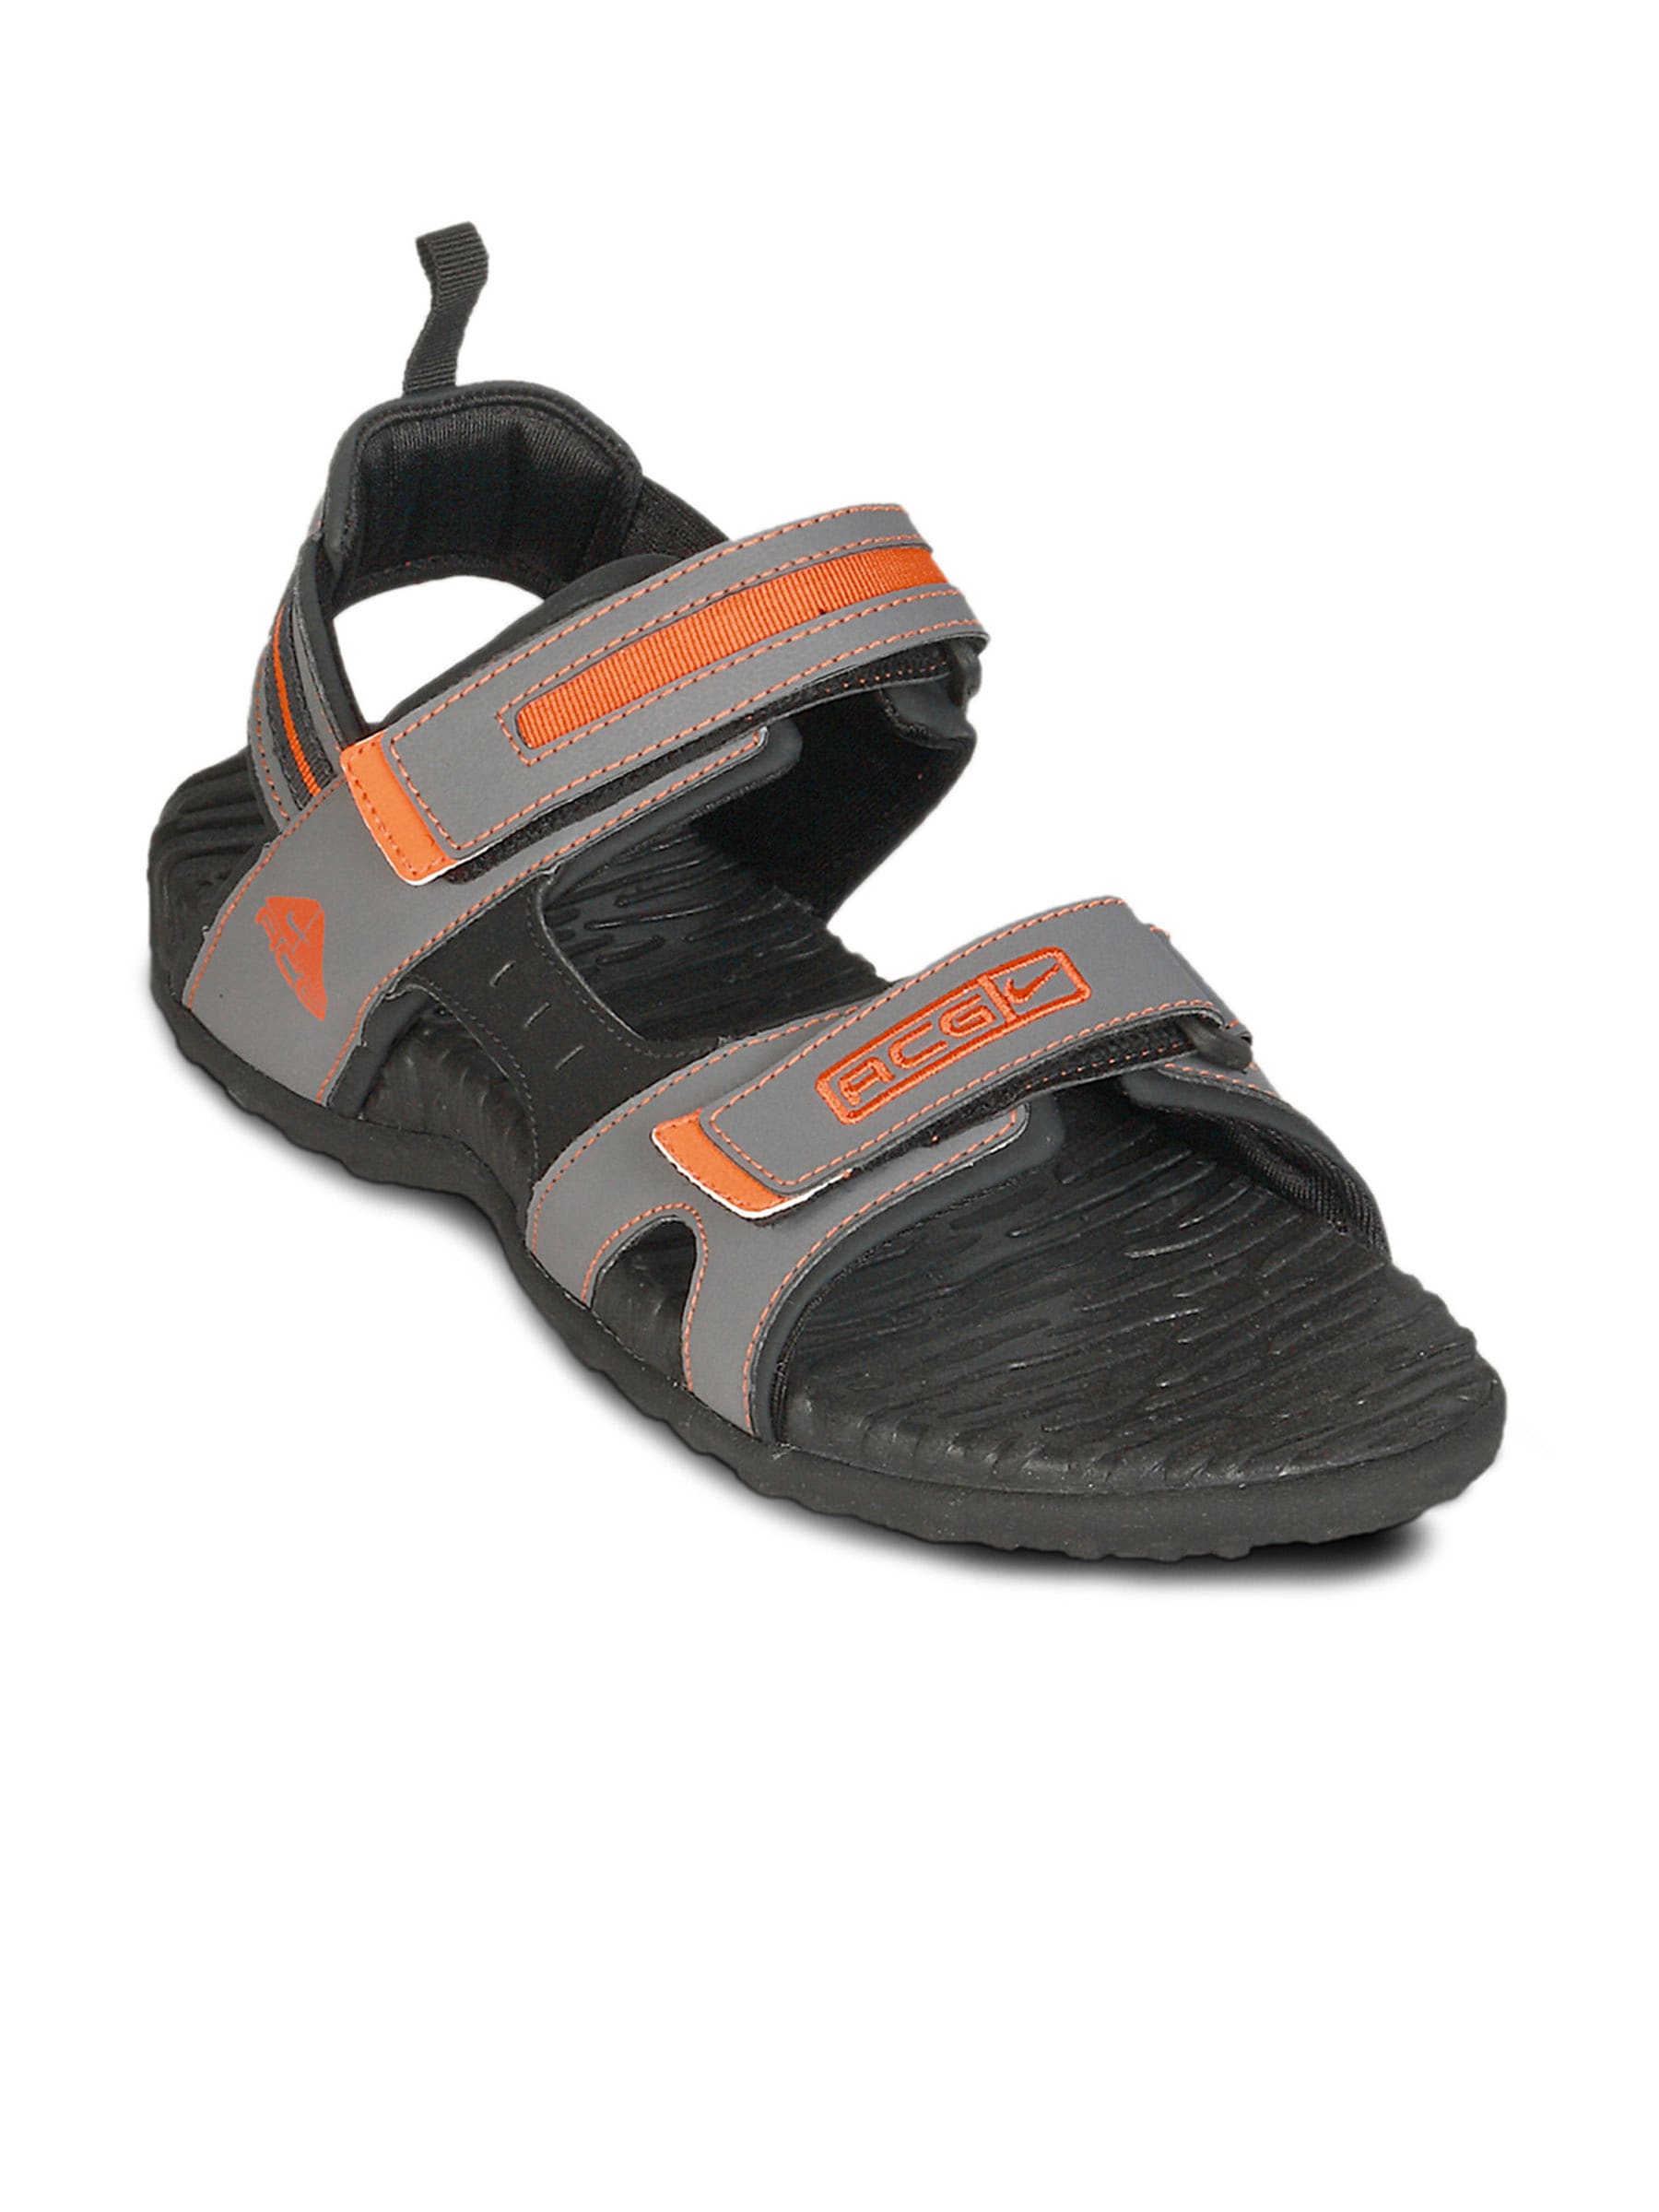 Nike Men Extra Wilderness Black Orange Sandal